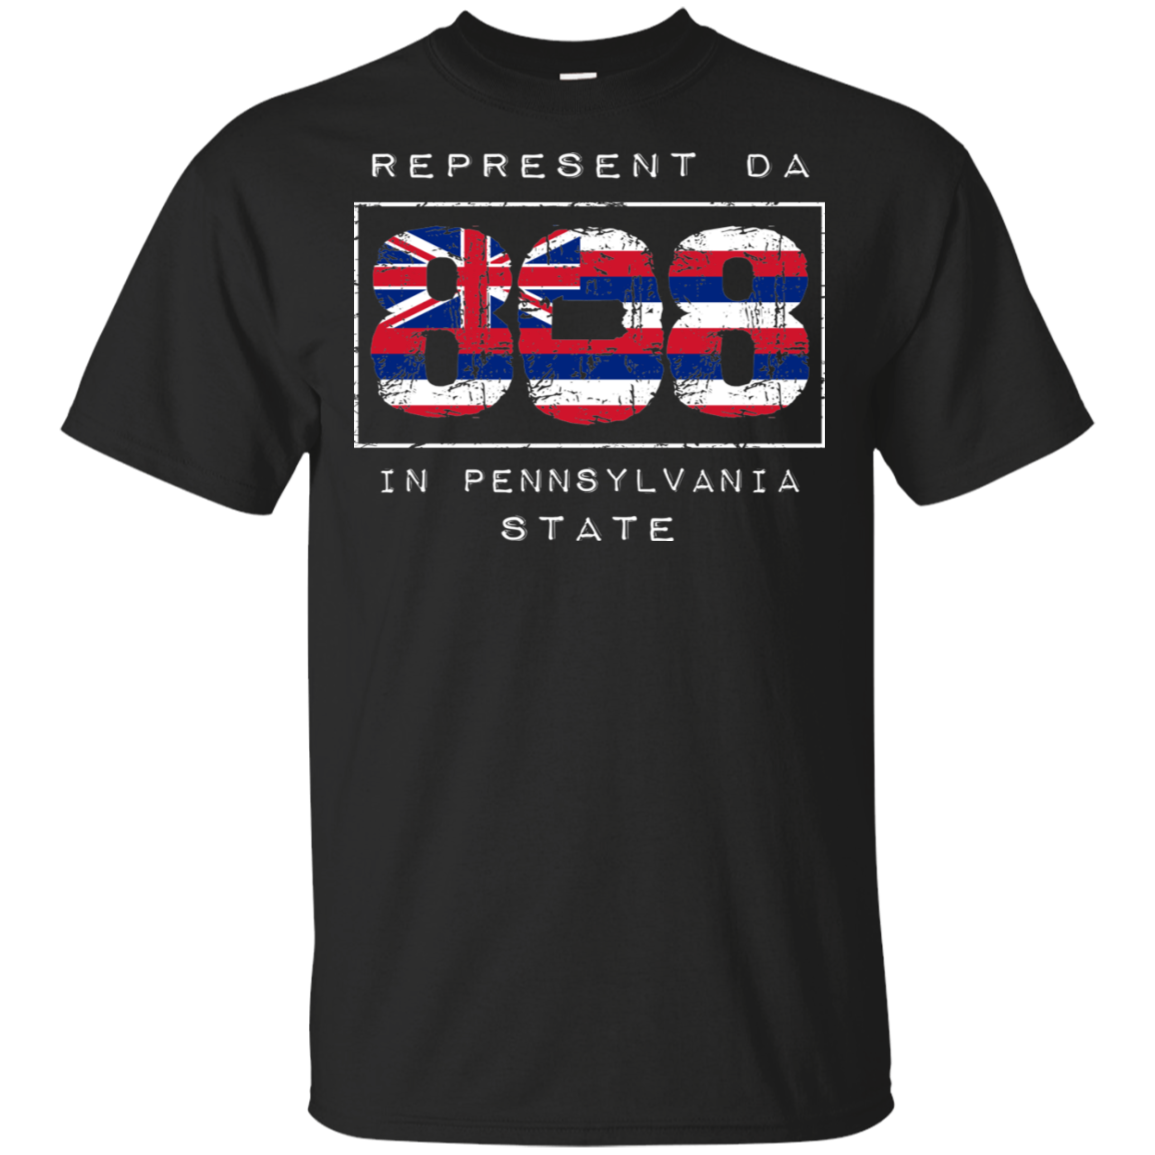 Rep Da 808 In Pennsylvania State Ultra Cotton T-Shirt, T-Shirts, Hawaii Nei All Day